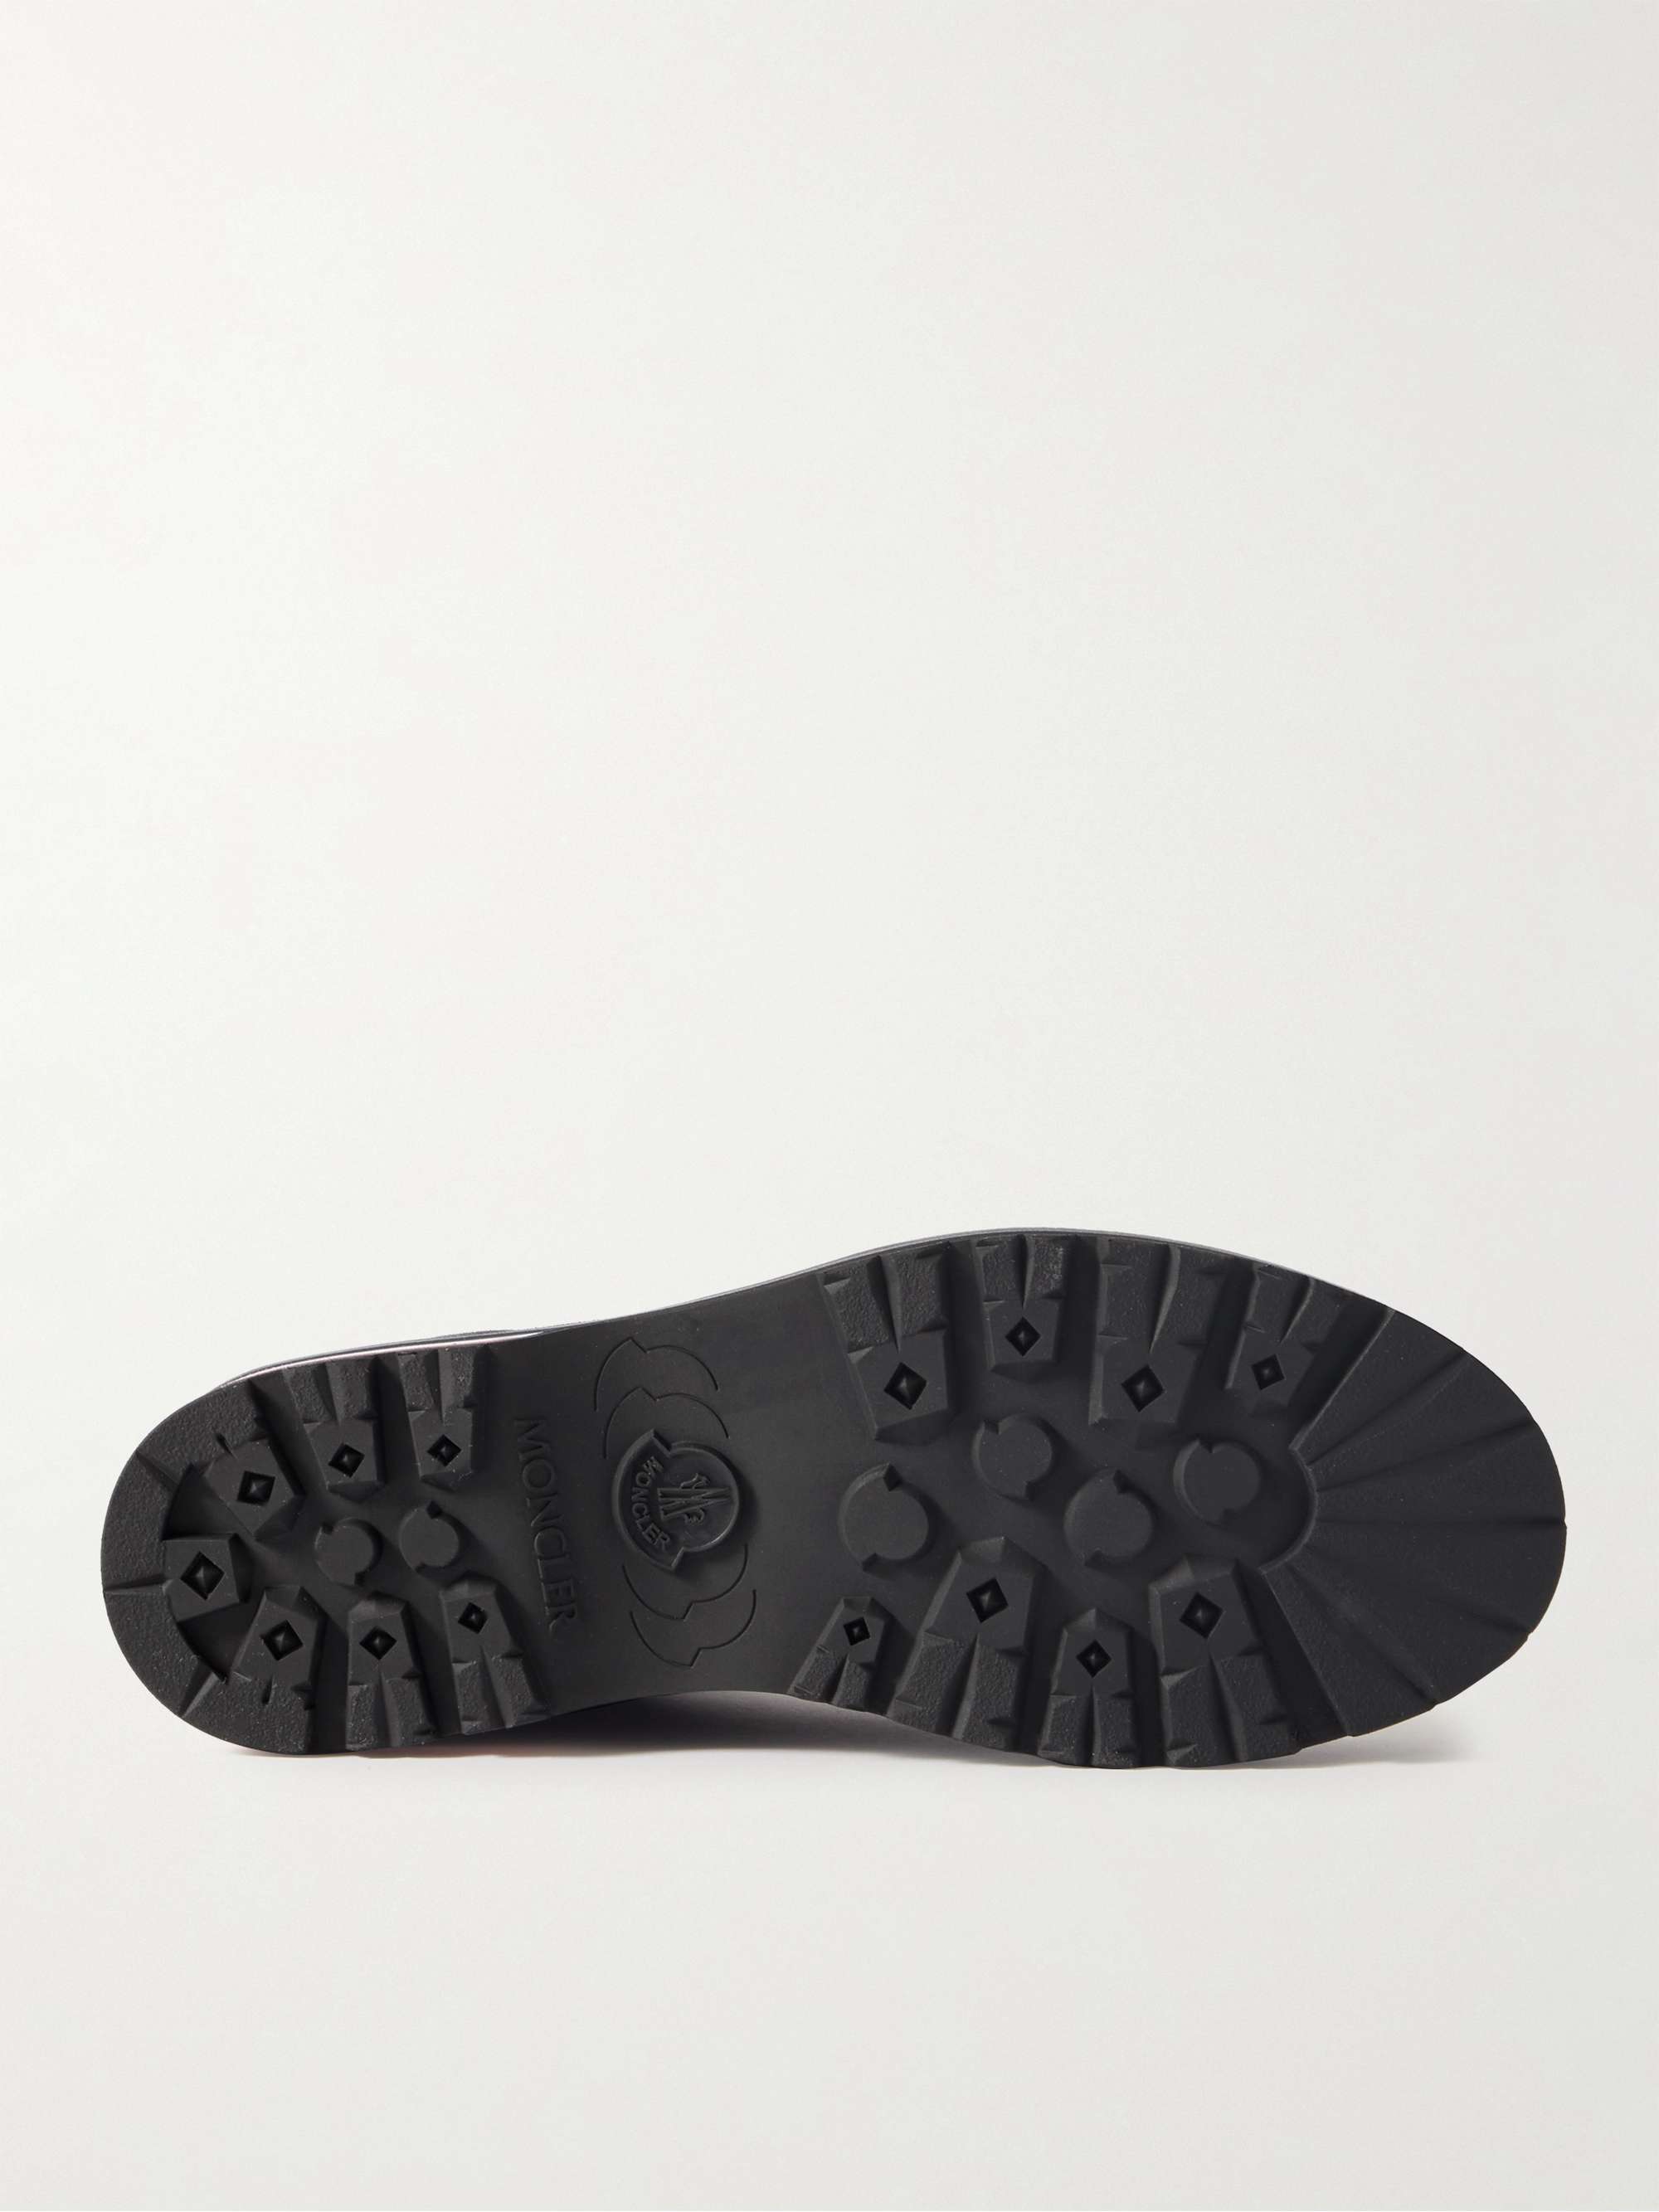 MONCLER Vancouver Canvas-Trimmed Suede Boots